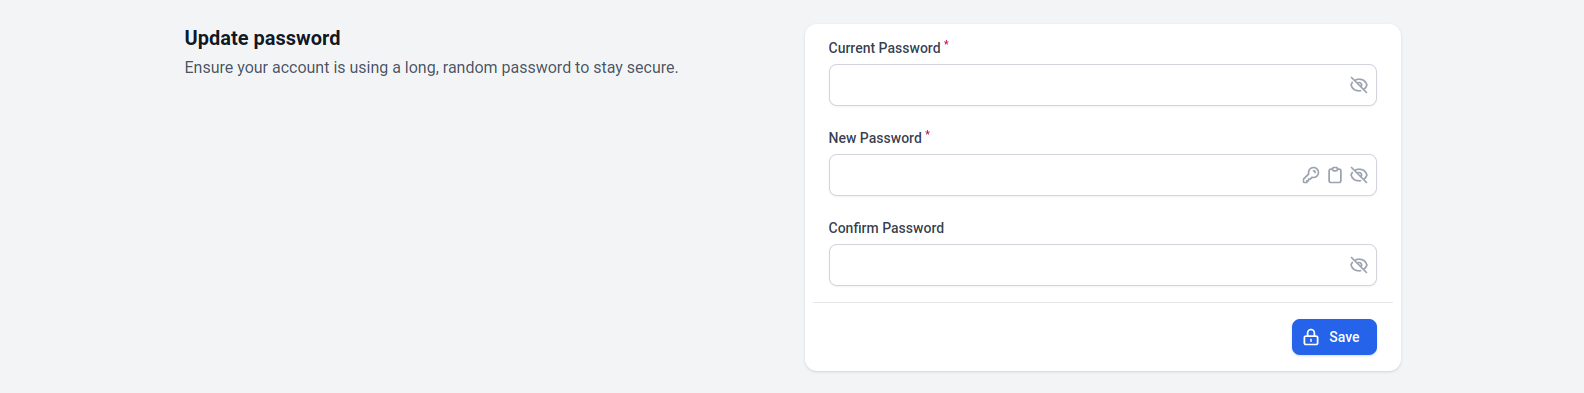 Filament Jet update password art